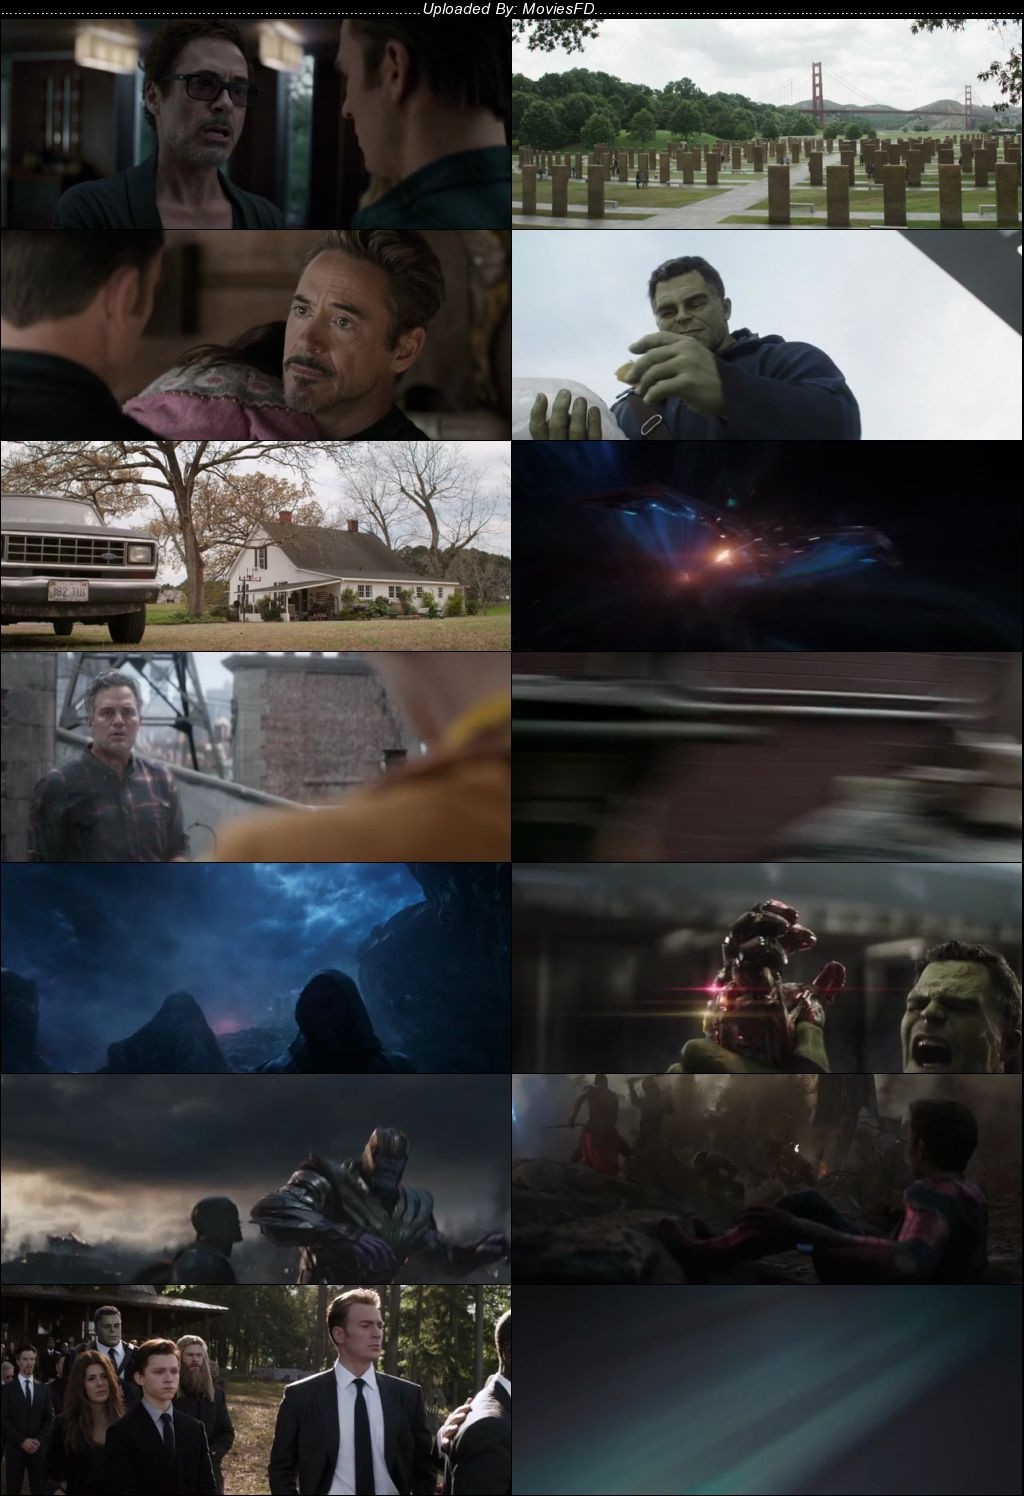 Download Avengers: Endgame (2019) BluRay [Hindi + Tamil + Telugu + English] ESub 480p 720p 1080p